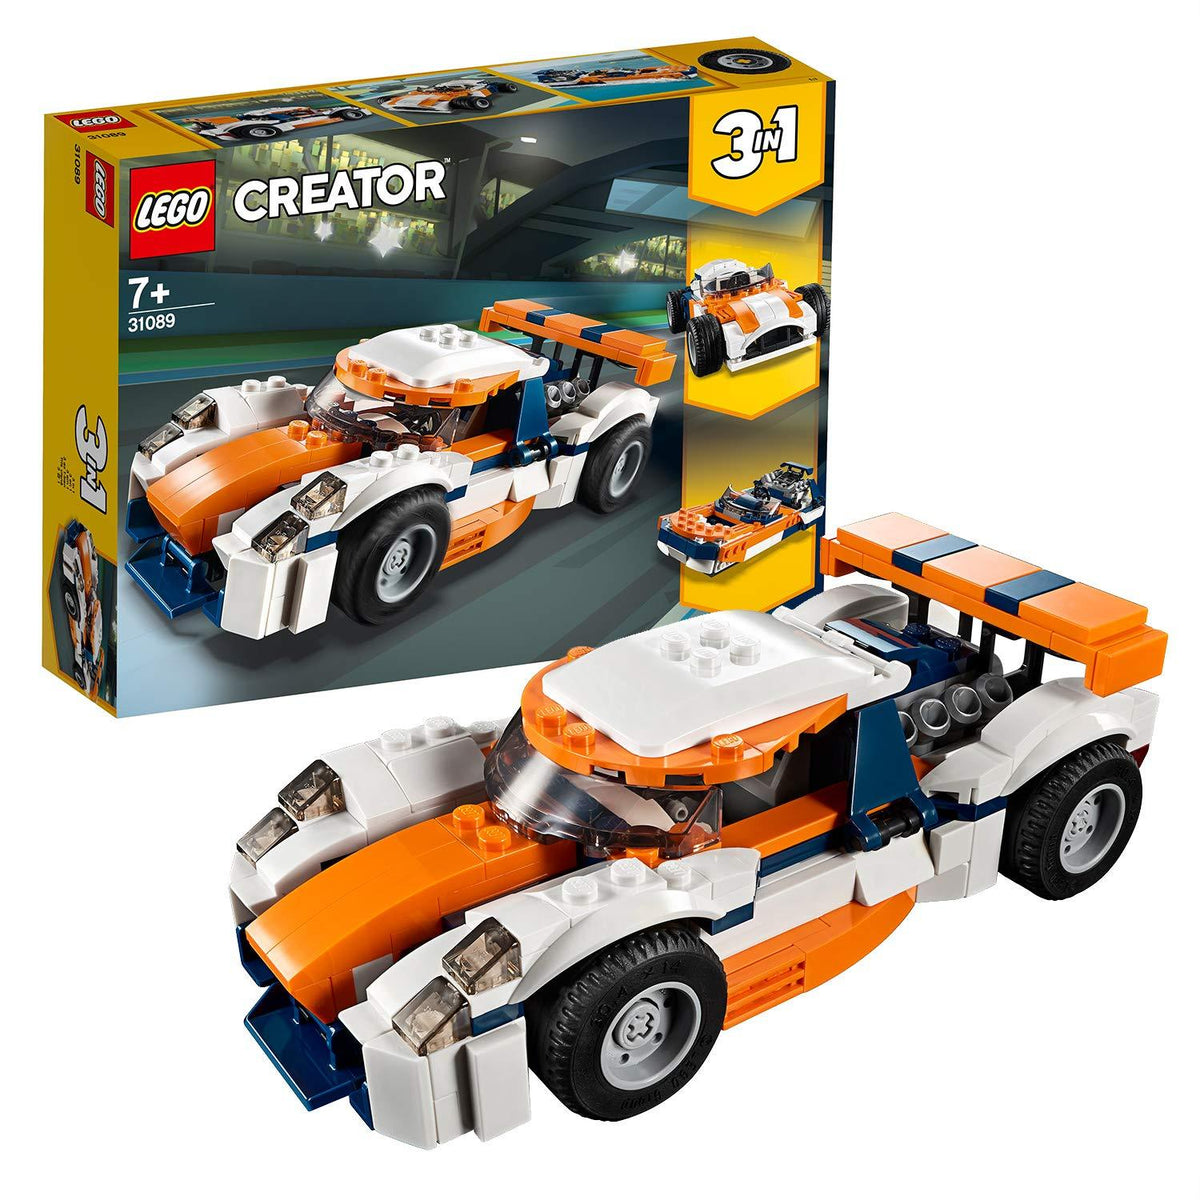 Lego Creator 3-1 31089